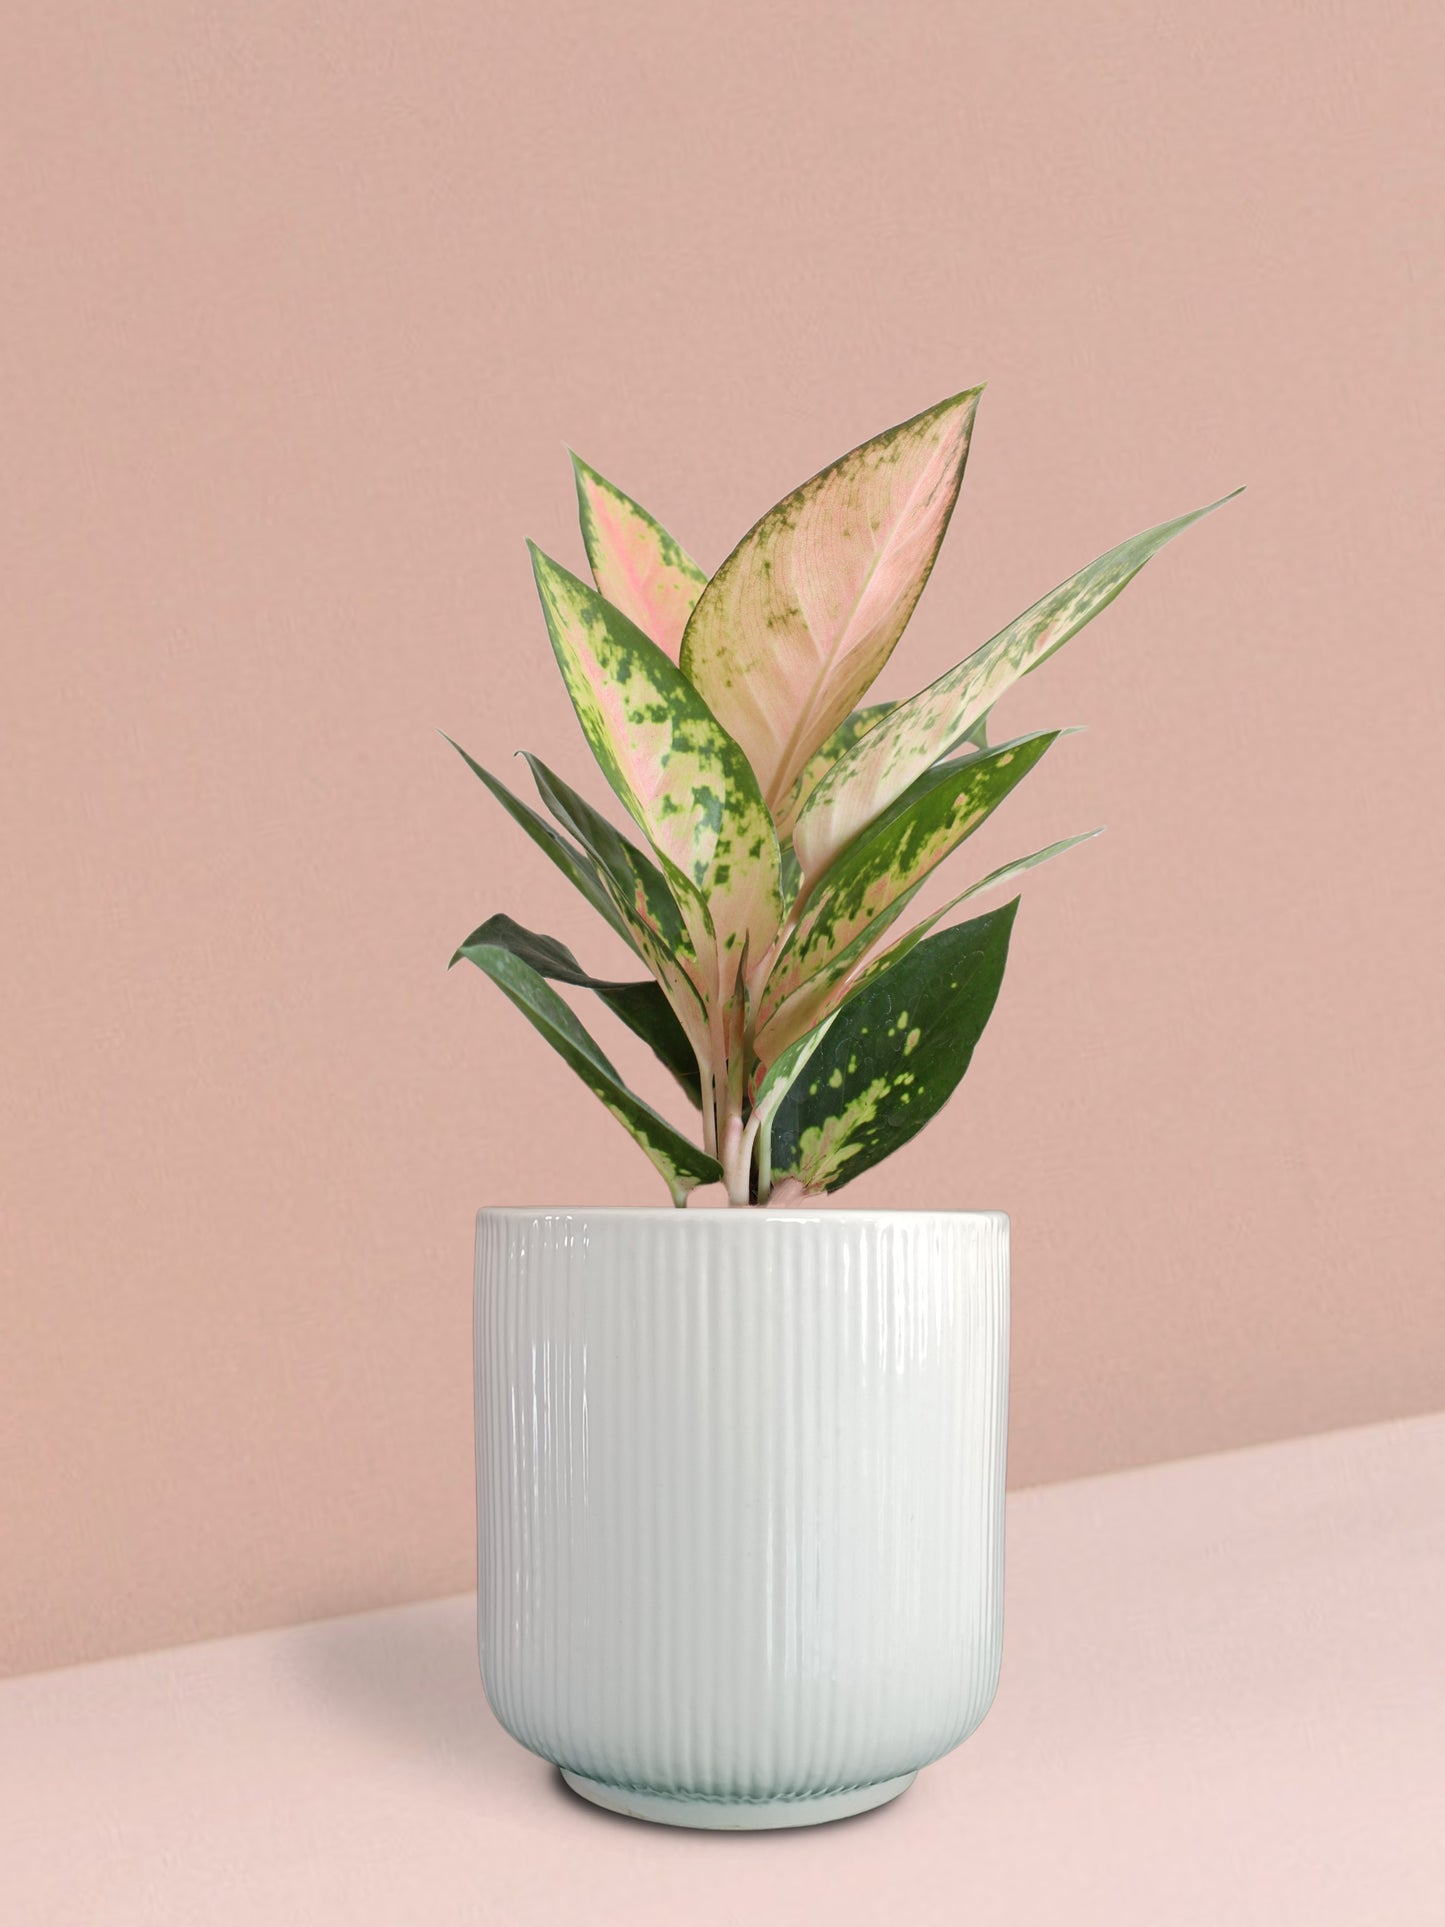 Aglaonema 'O' Rose Cochin Plant in Ceramic Pot (Medium)